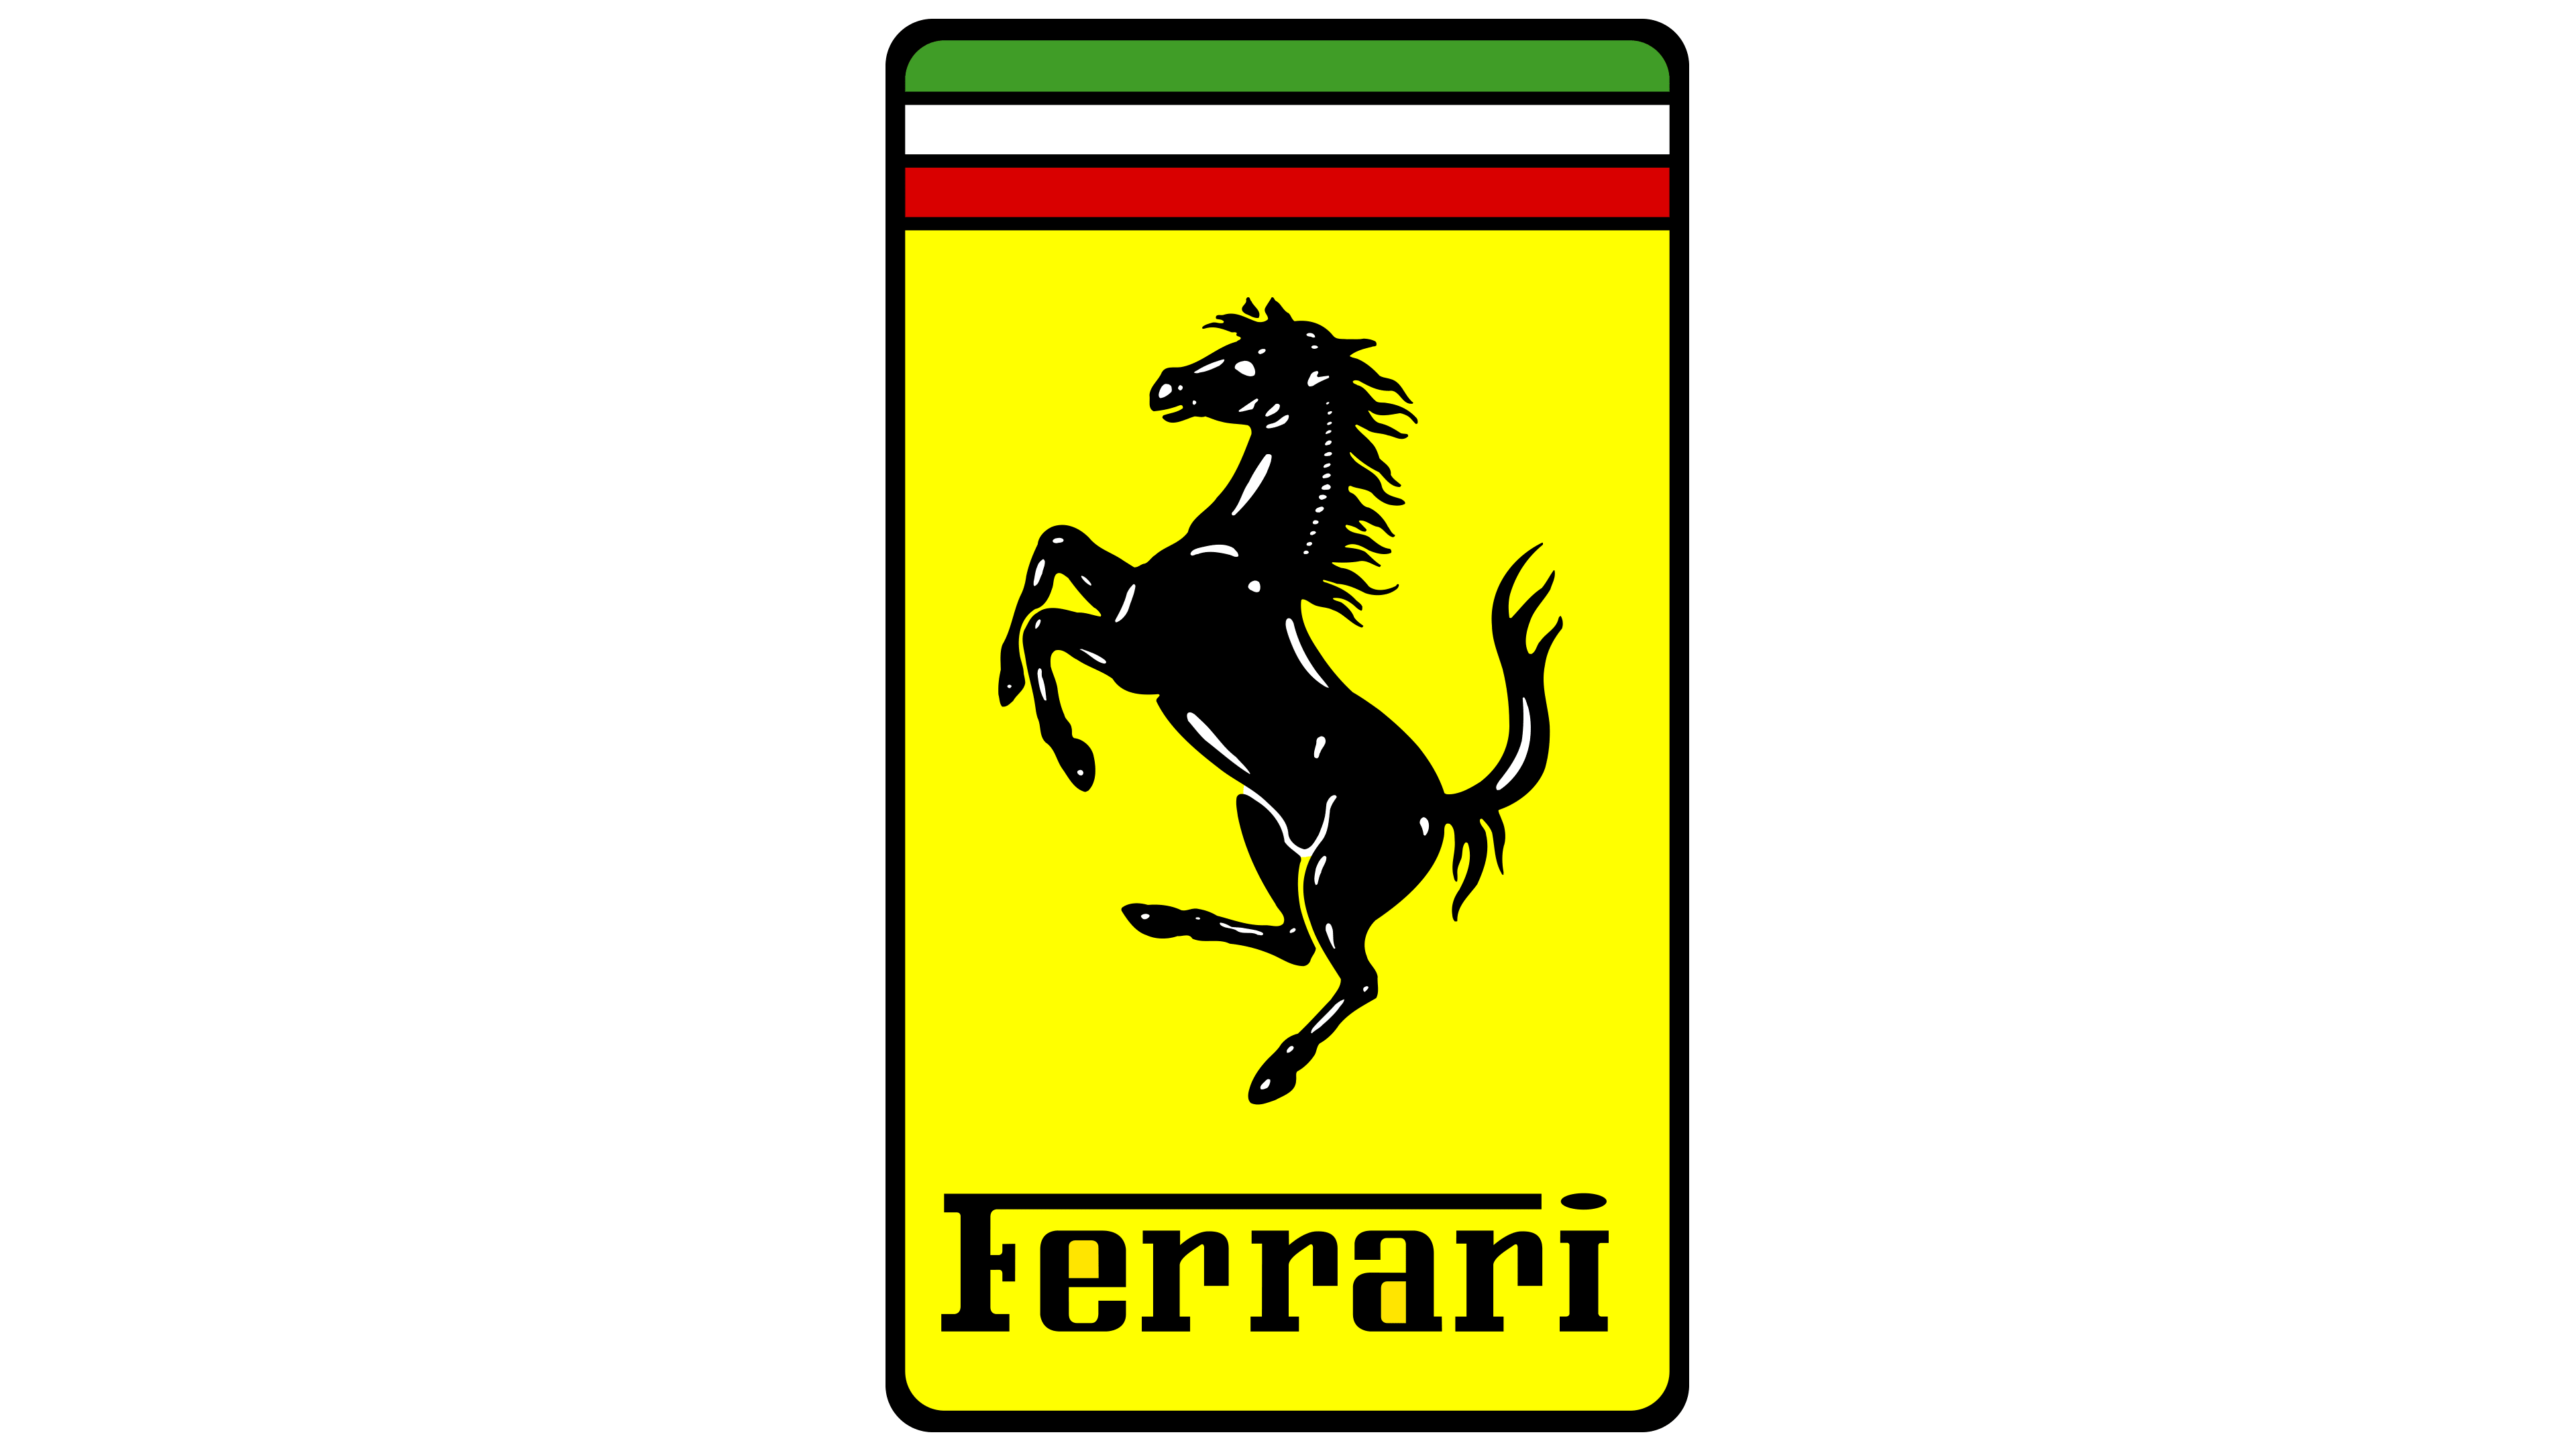 Ferrari Logowith Prancing Horse